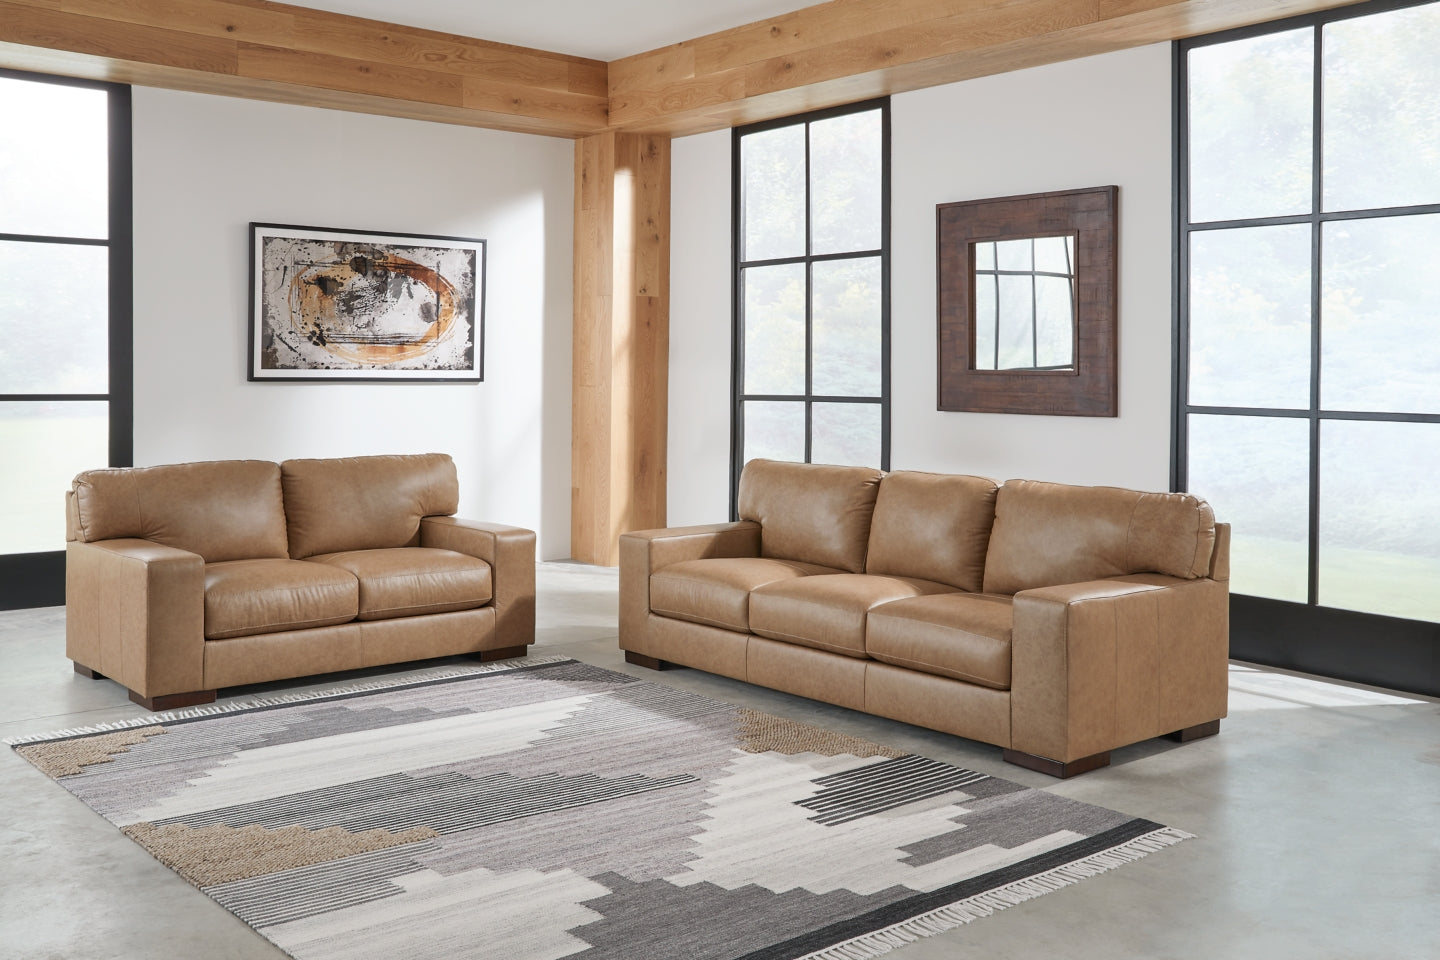 Lombardia Sofa and Loveseat - furniture place usa